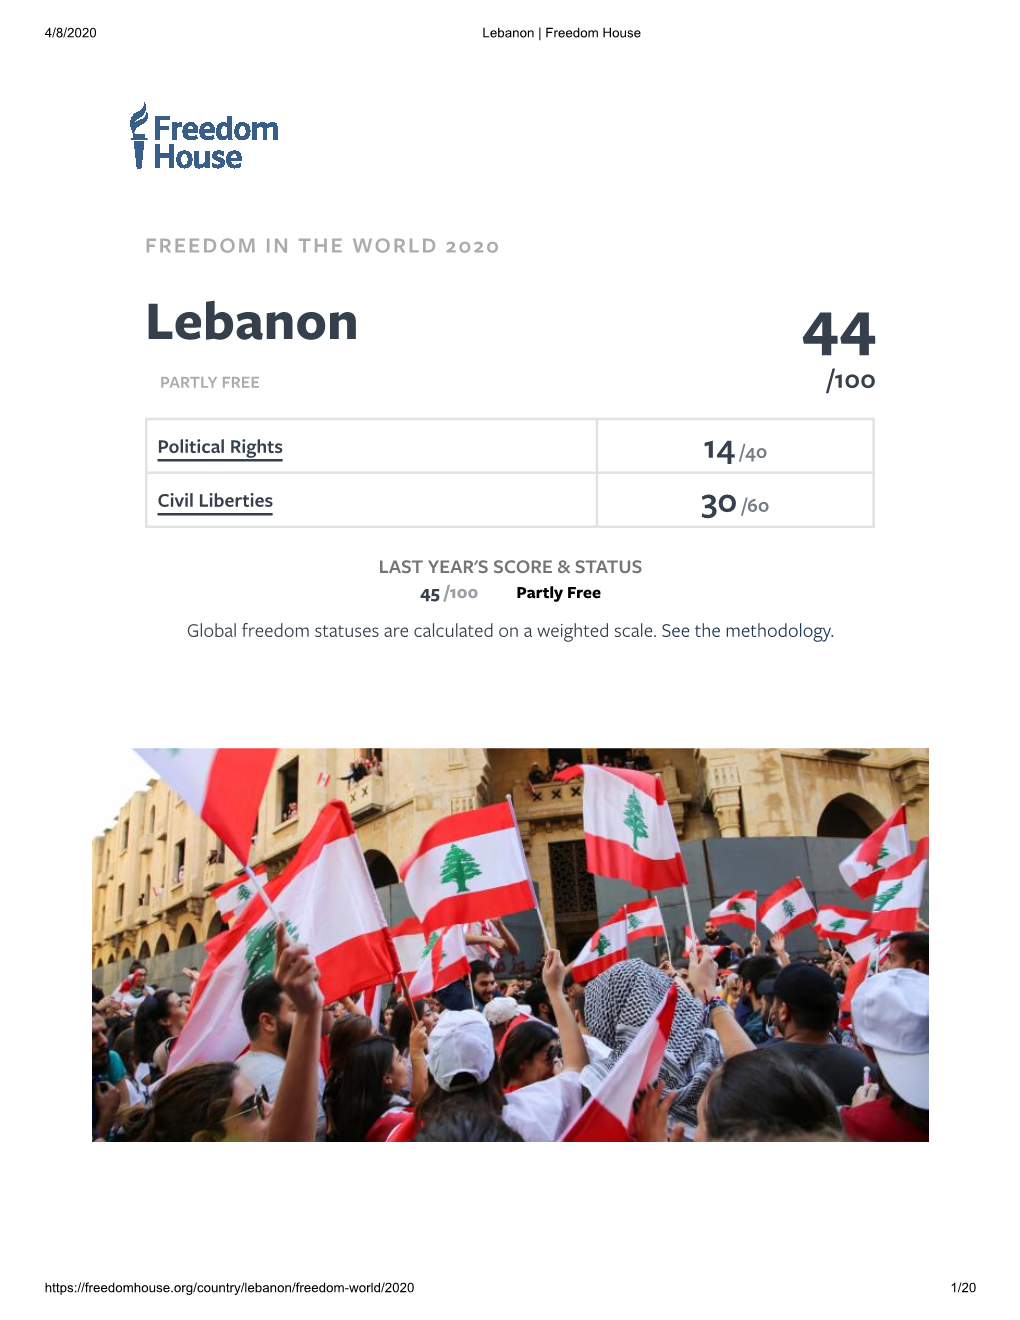 Lebanon: Freedom in the World 2020